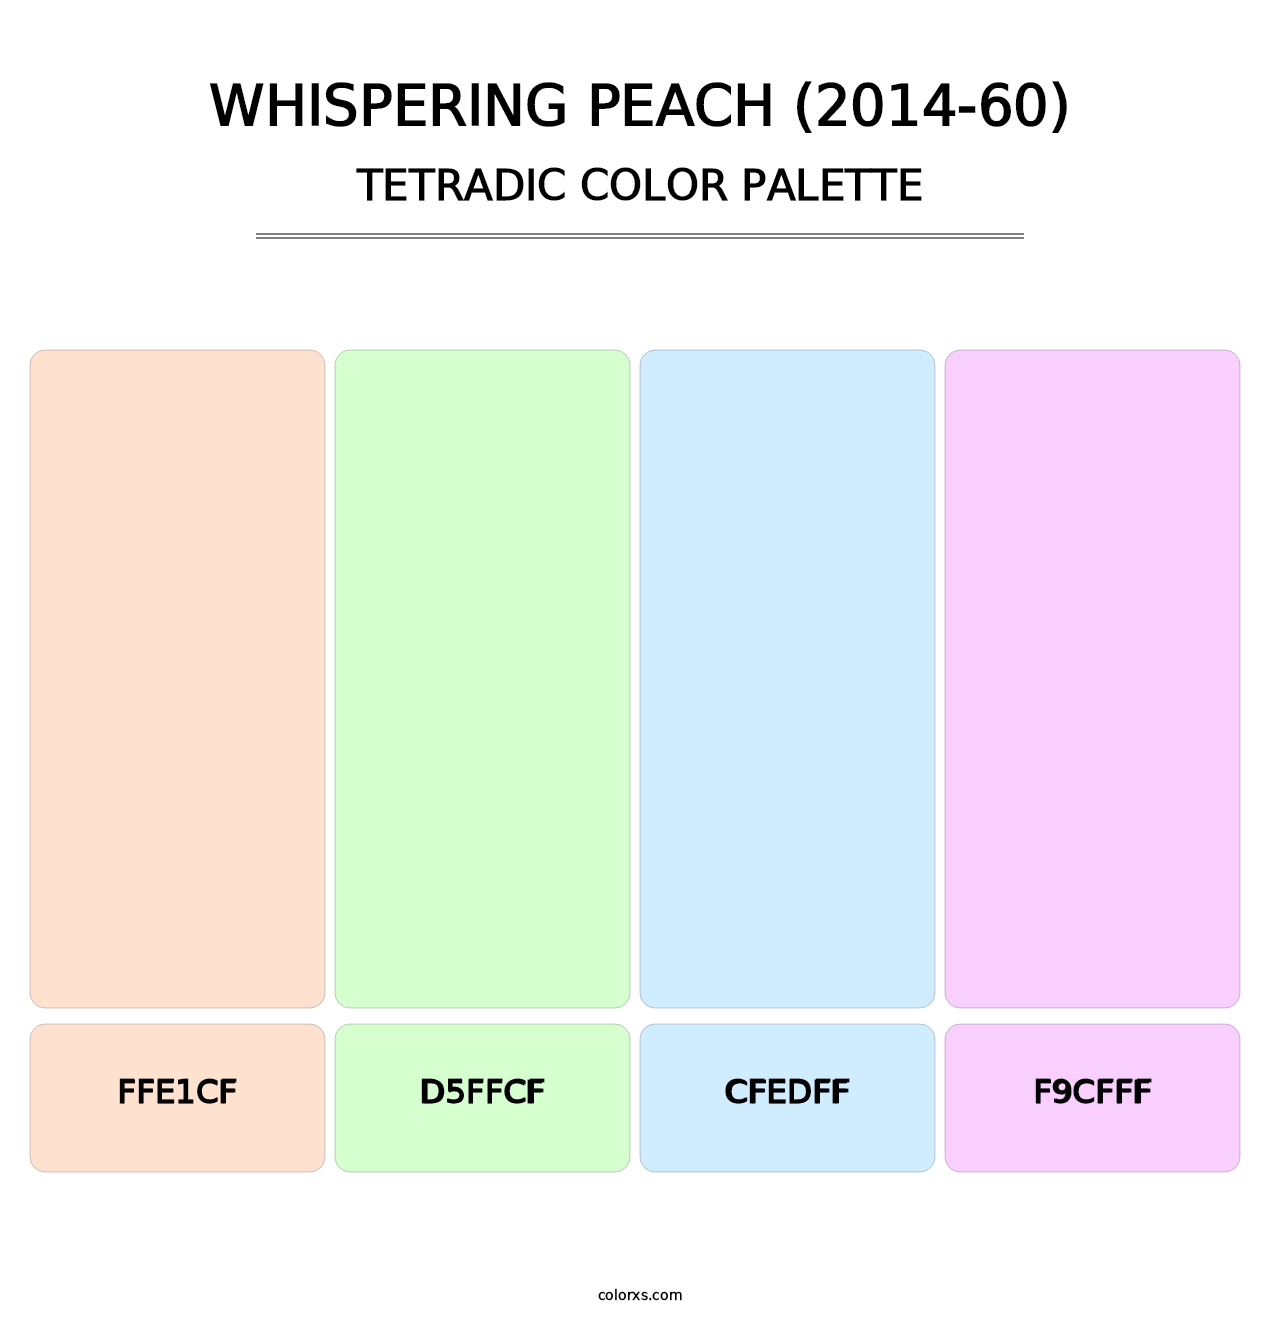 Whispering Peach (2014-60) - Tetradic Color Palette